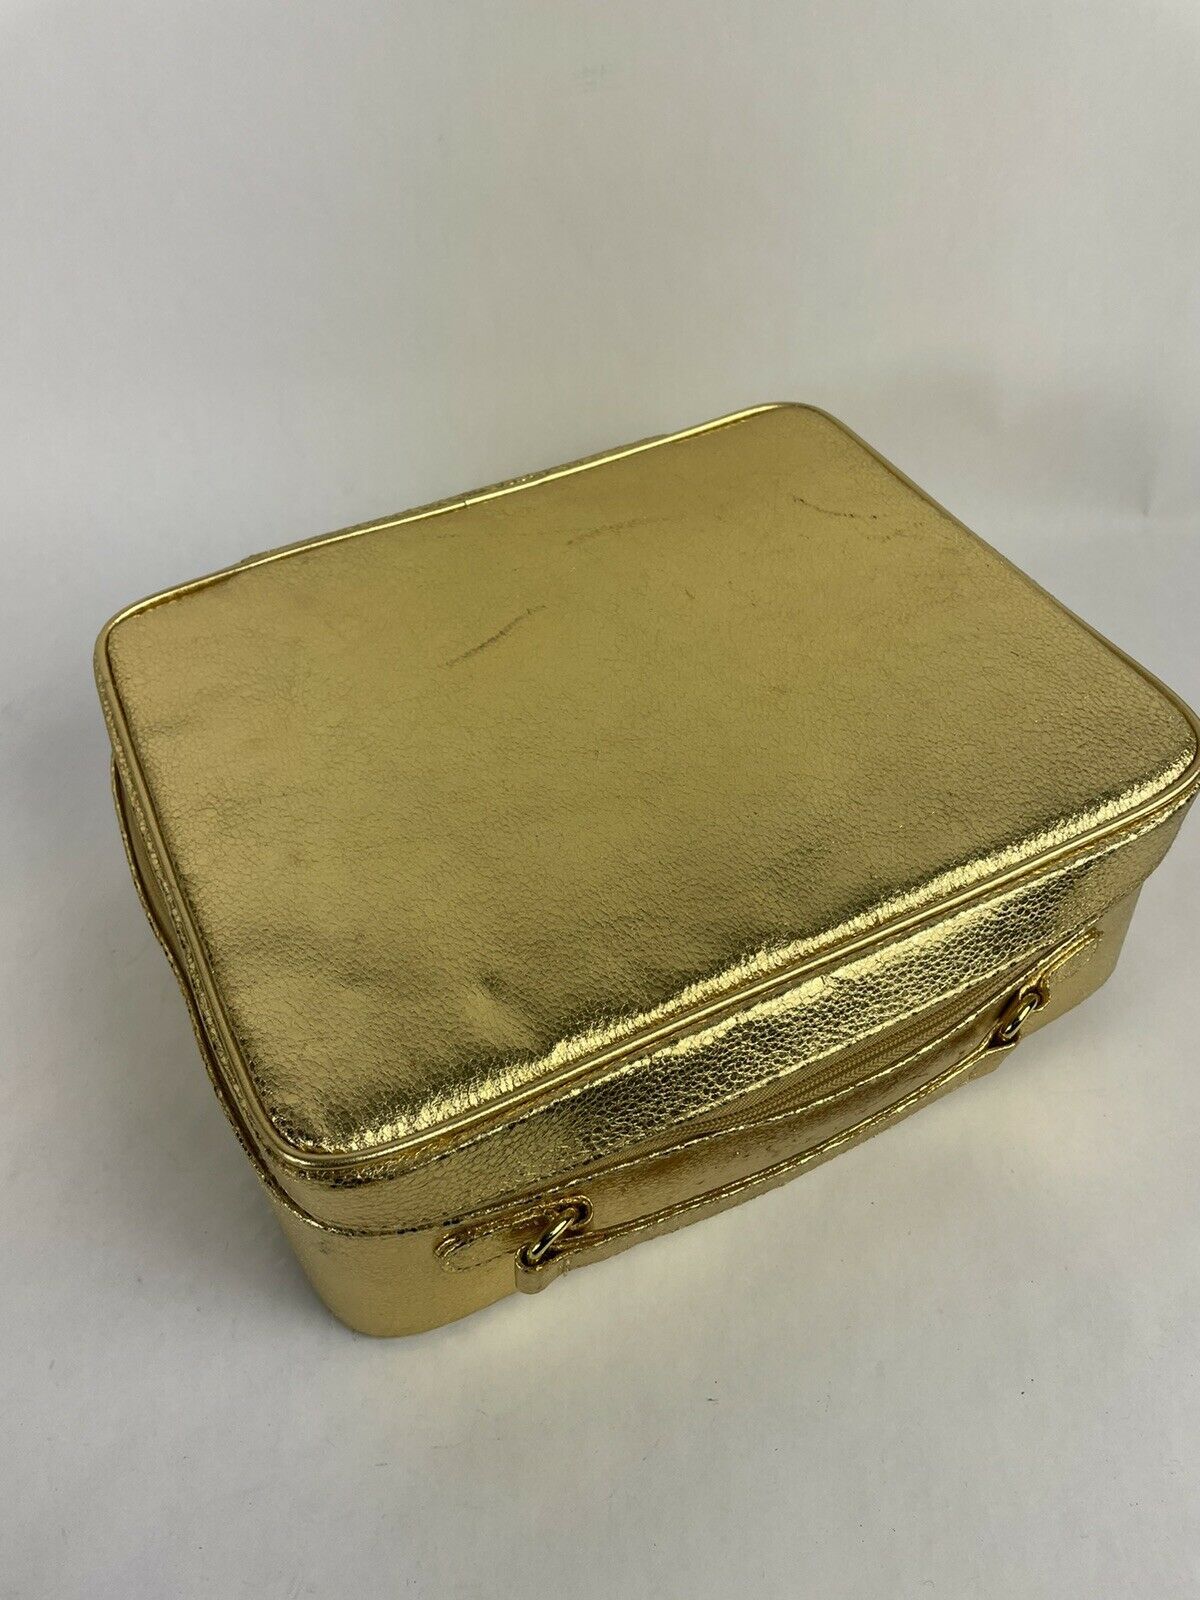 Primary image for Vintage Estee Lauder Gold Cosmetic Train Travel Case Bag Suitcase Metallic Soft